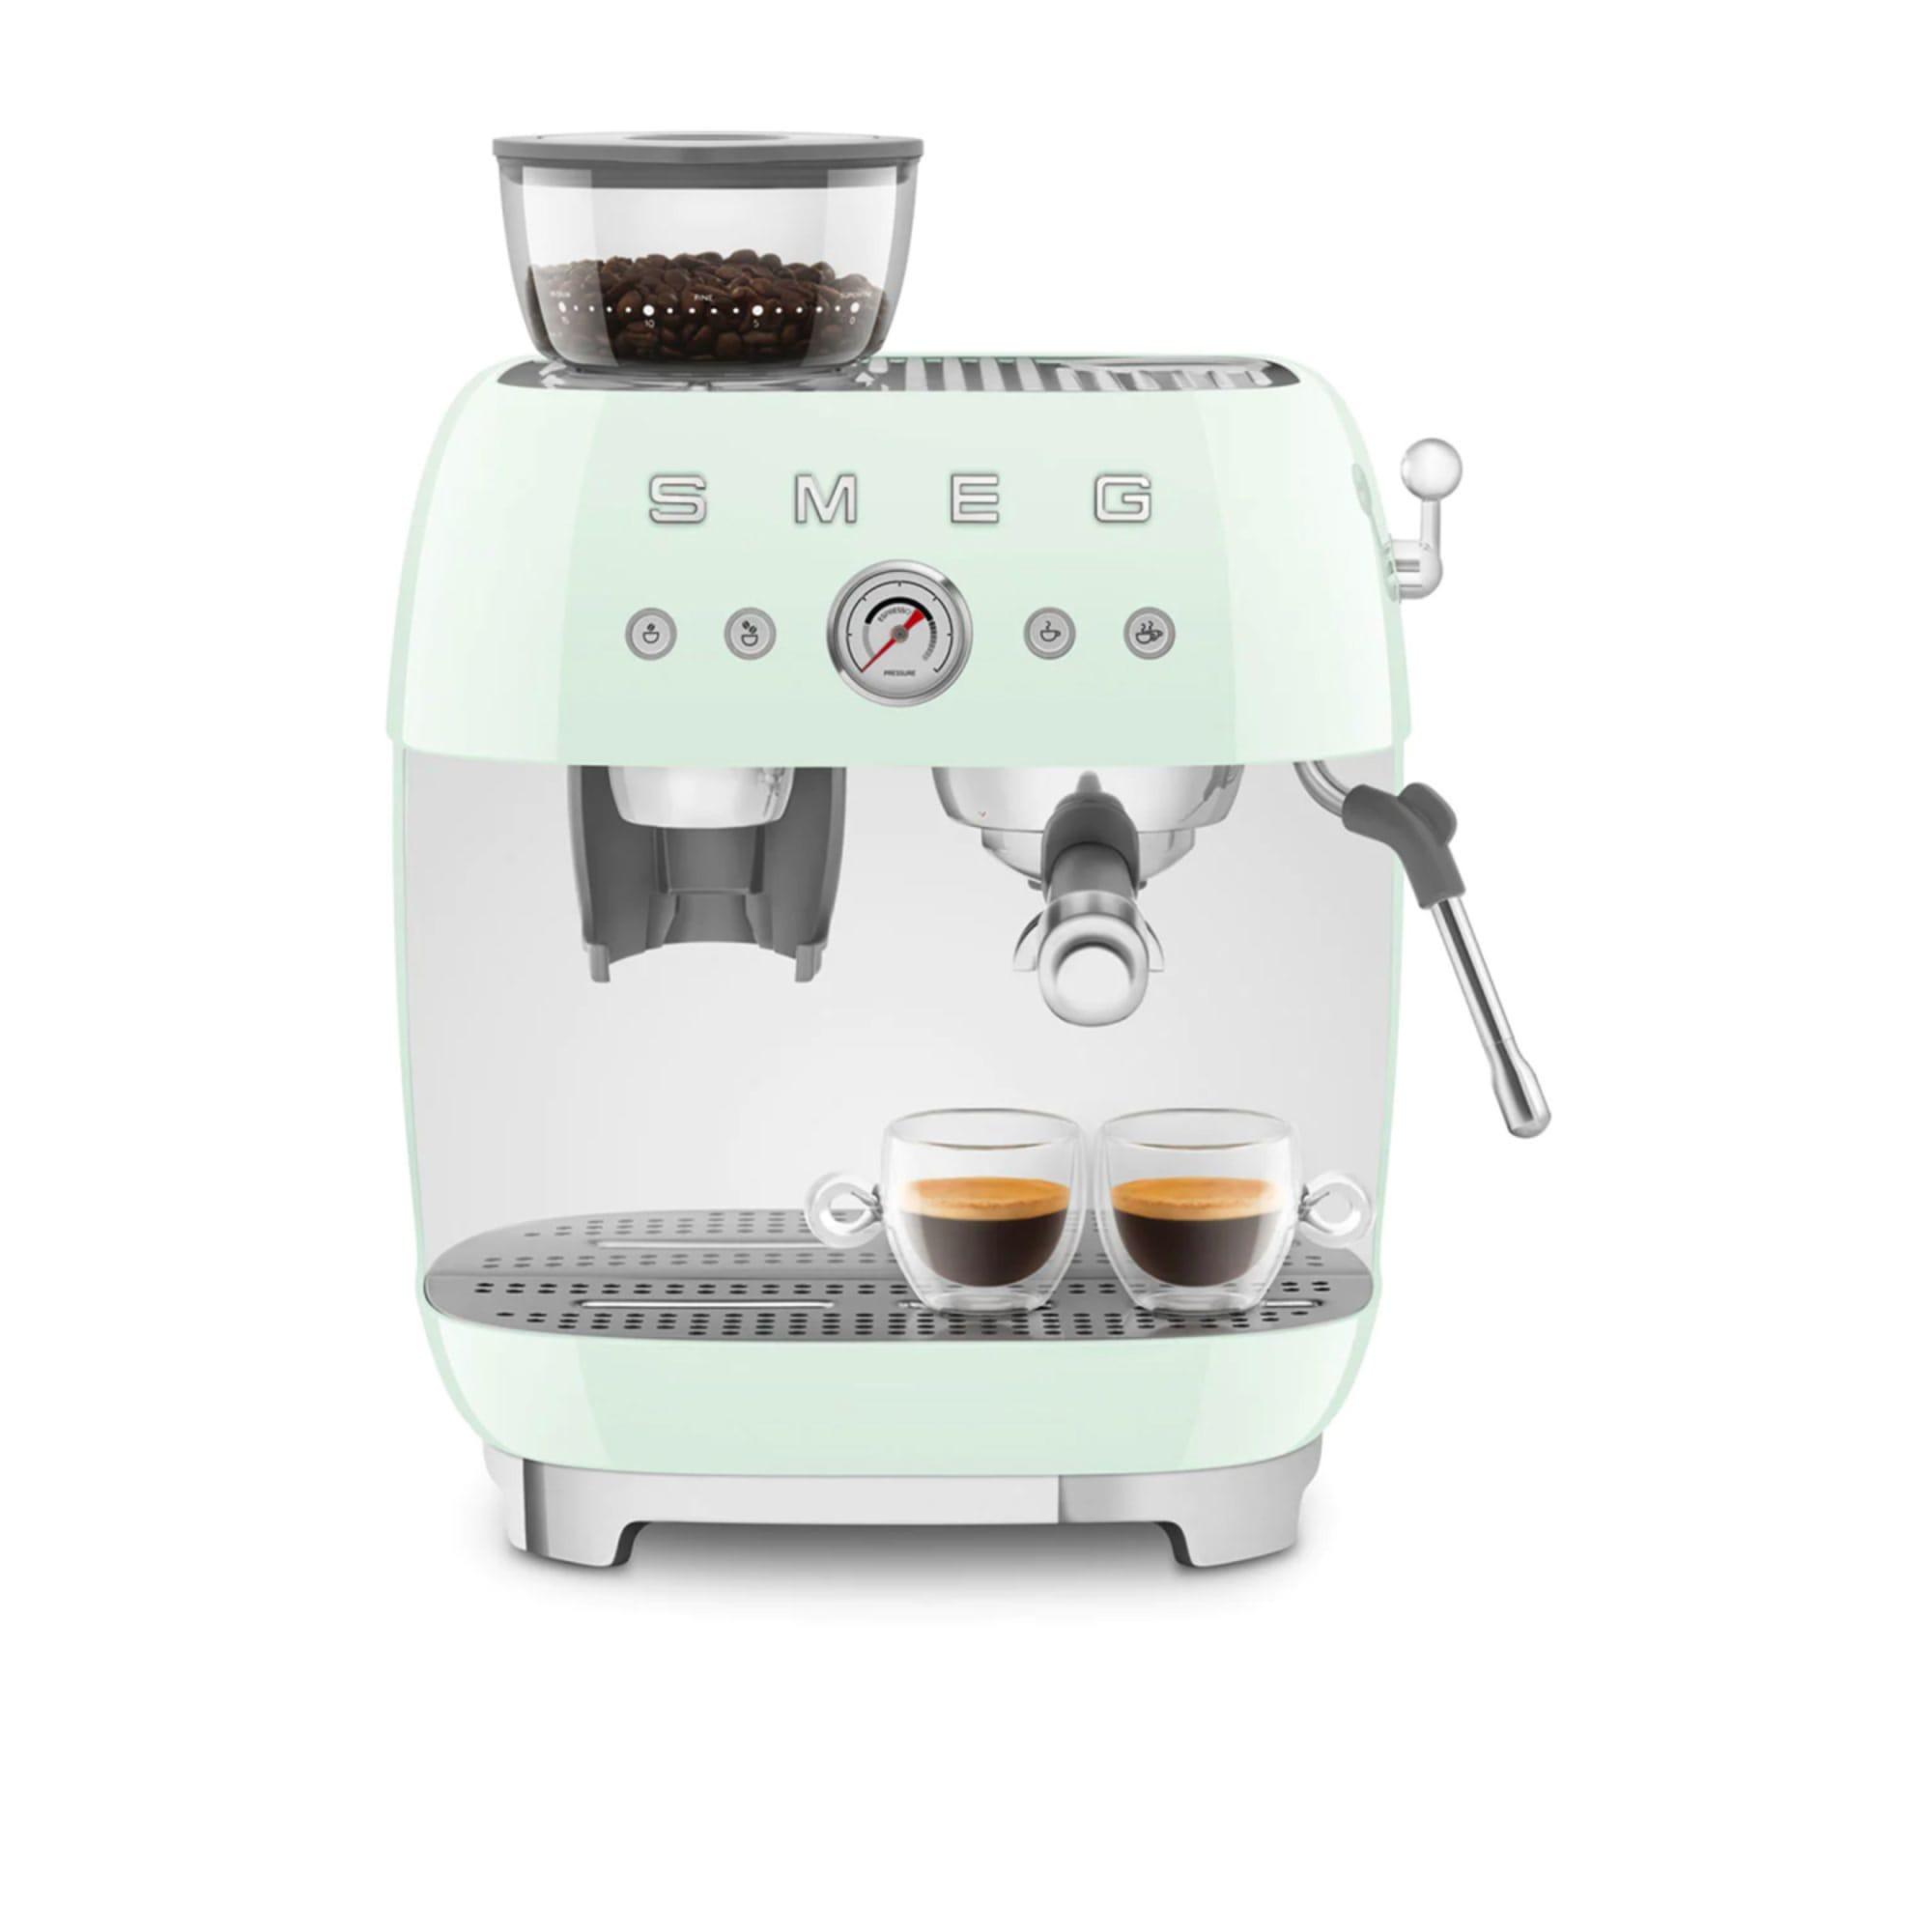 Smeg 50's Retro Style Espresso Machine with Built In Grinder Pastel Green Image 8